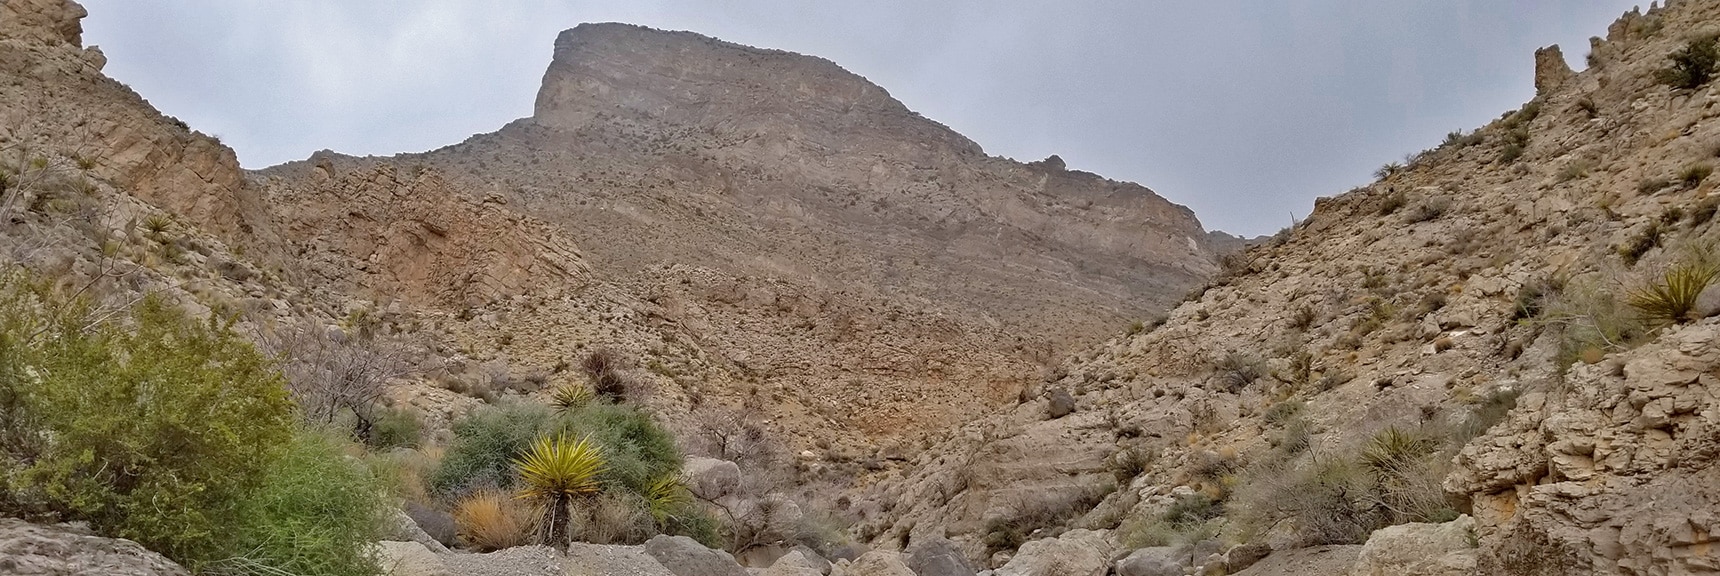 Turtlehead Peak from Rattlesnake Trail in gateway Canyon | Kraft Mountain Loop | Calico Basin, Nevada